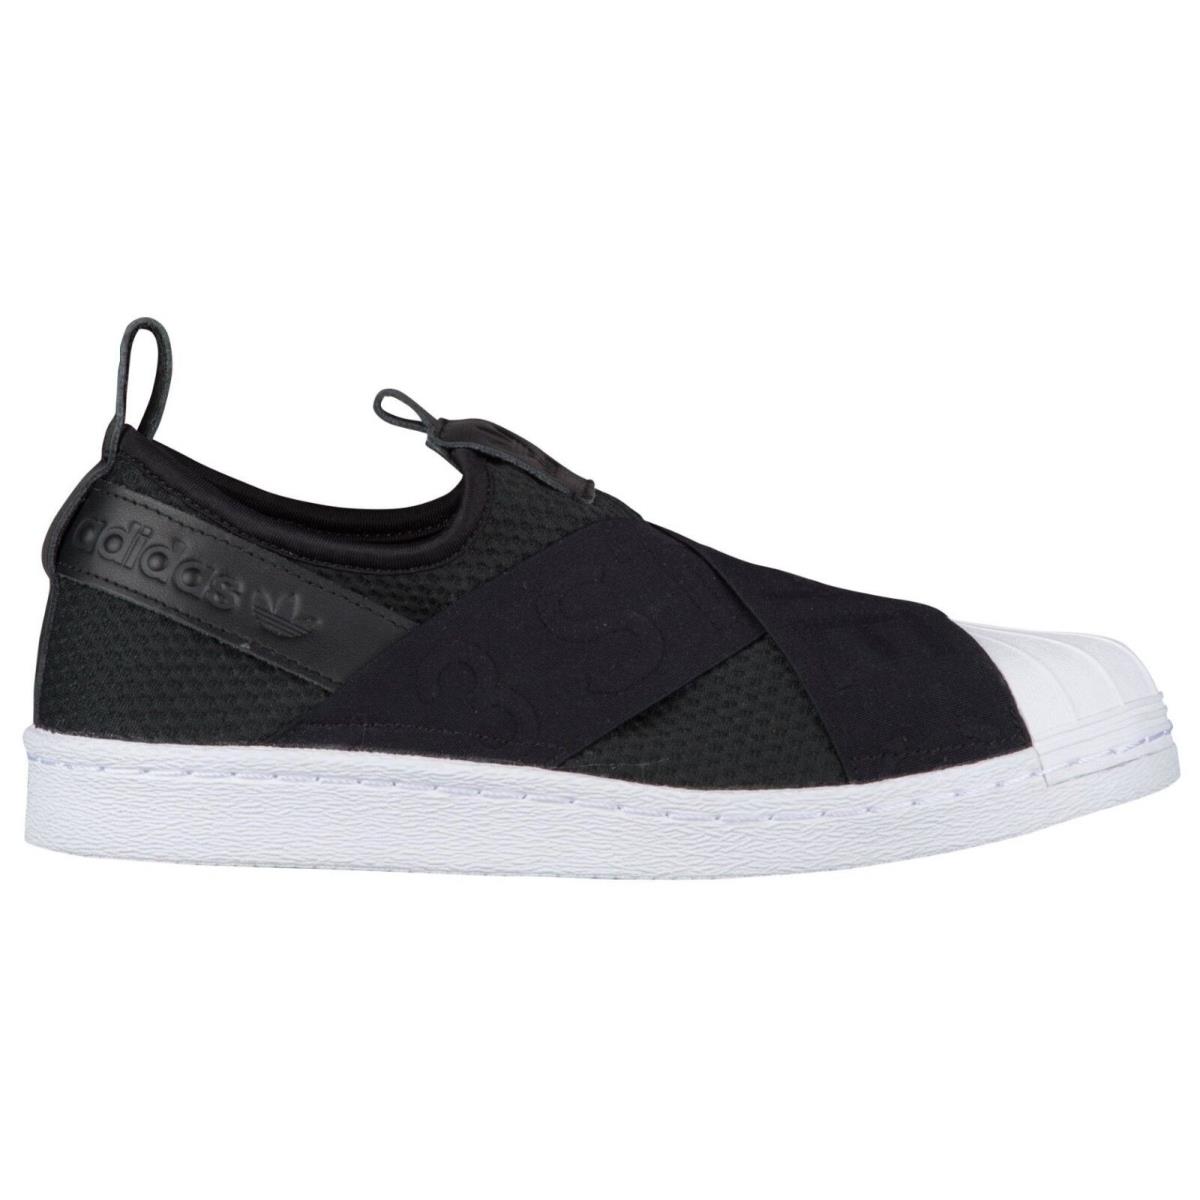 Adidas Superstar Slip On Womens CQ2382 Black White Neoprene Shell Shoes Sz 10.5